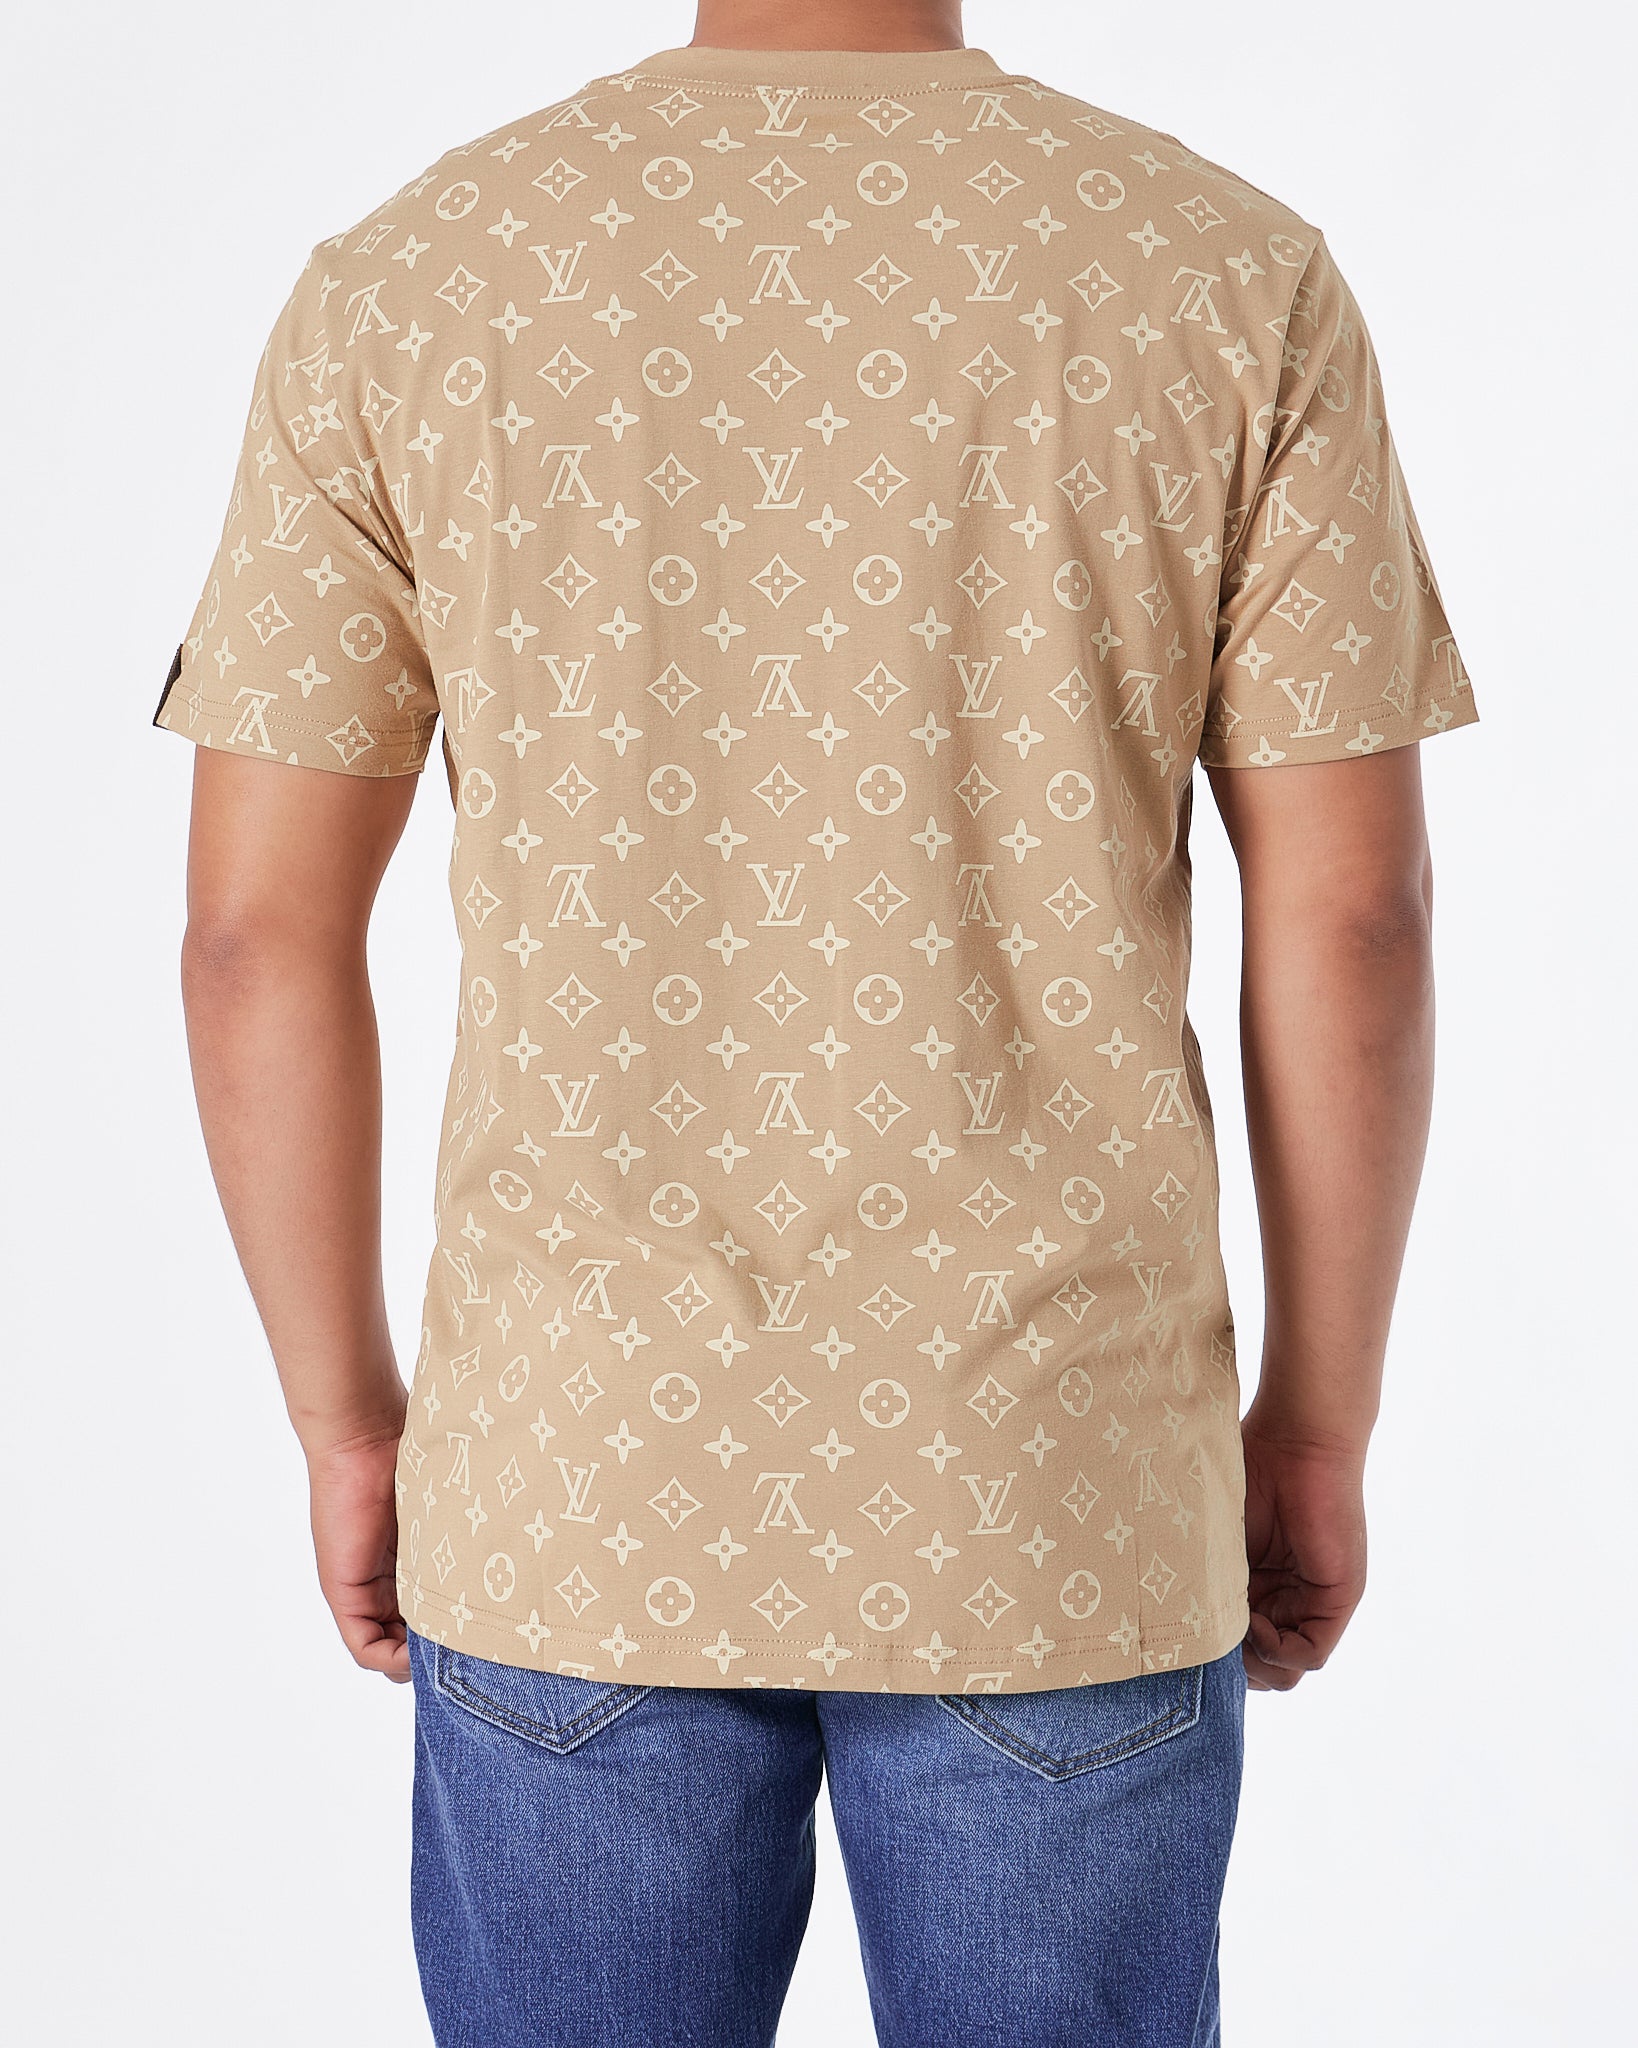 LV Monogram Over Printed Men Cream  T-Shirt 24.90